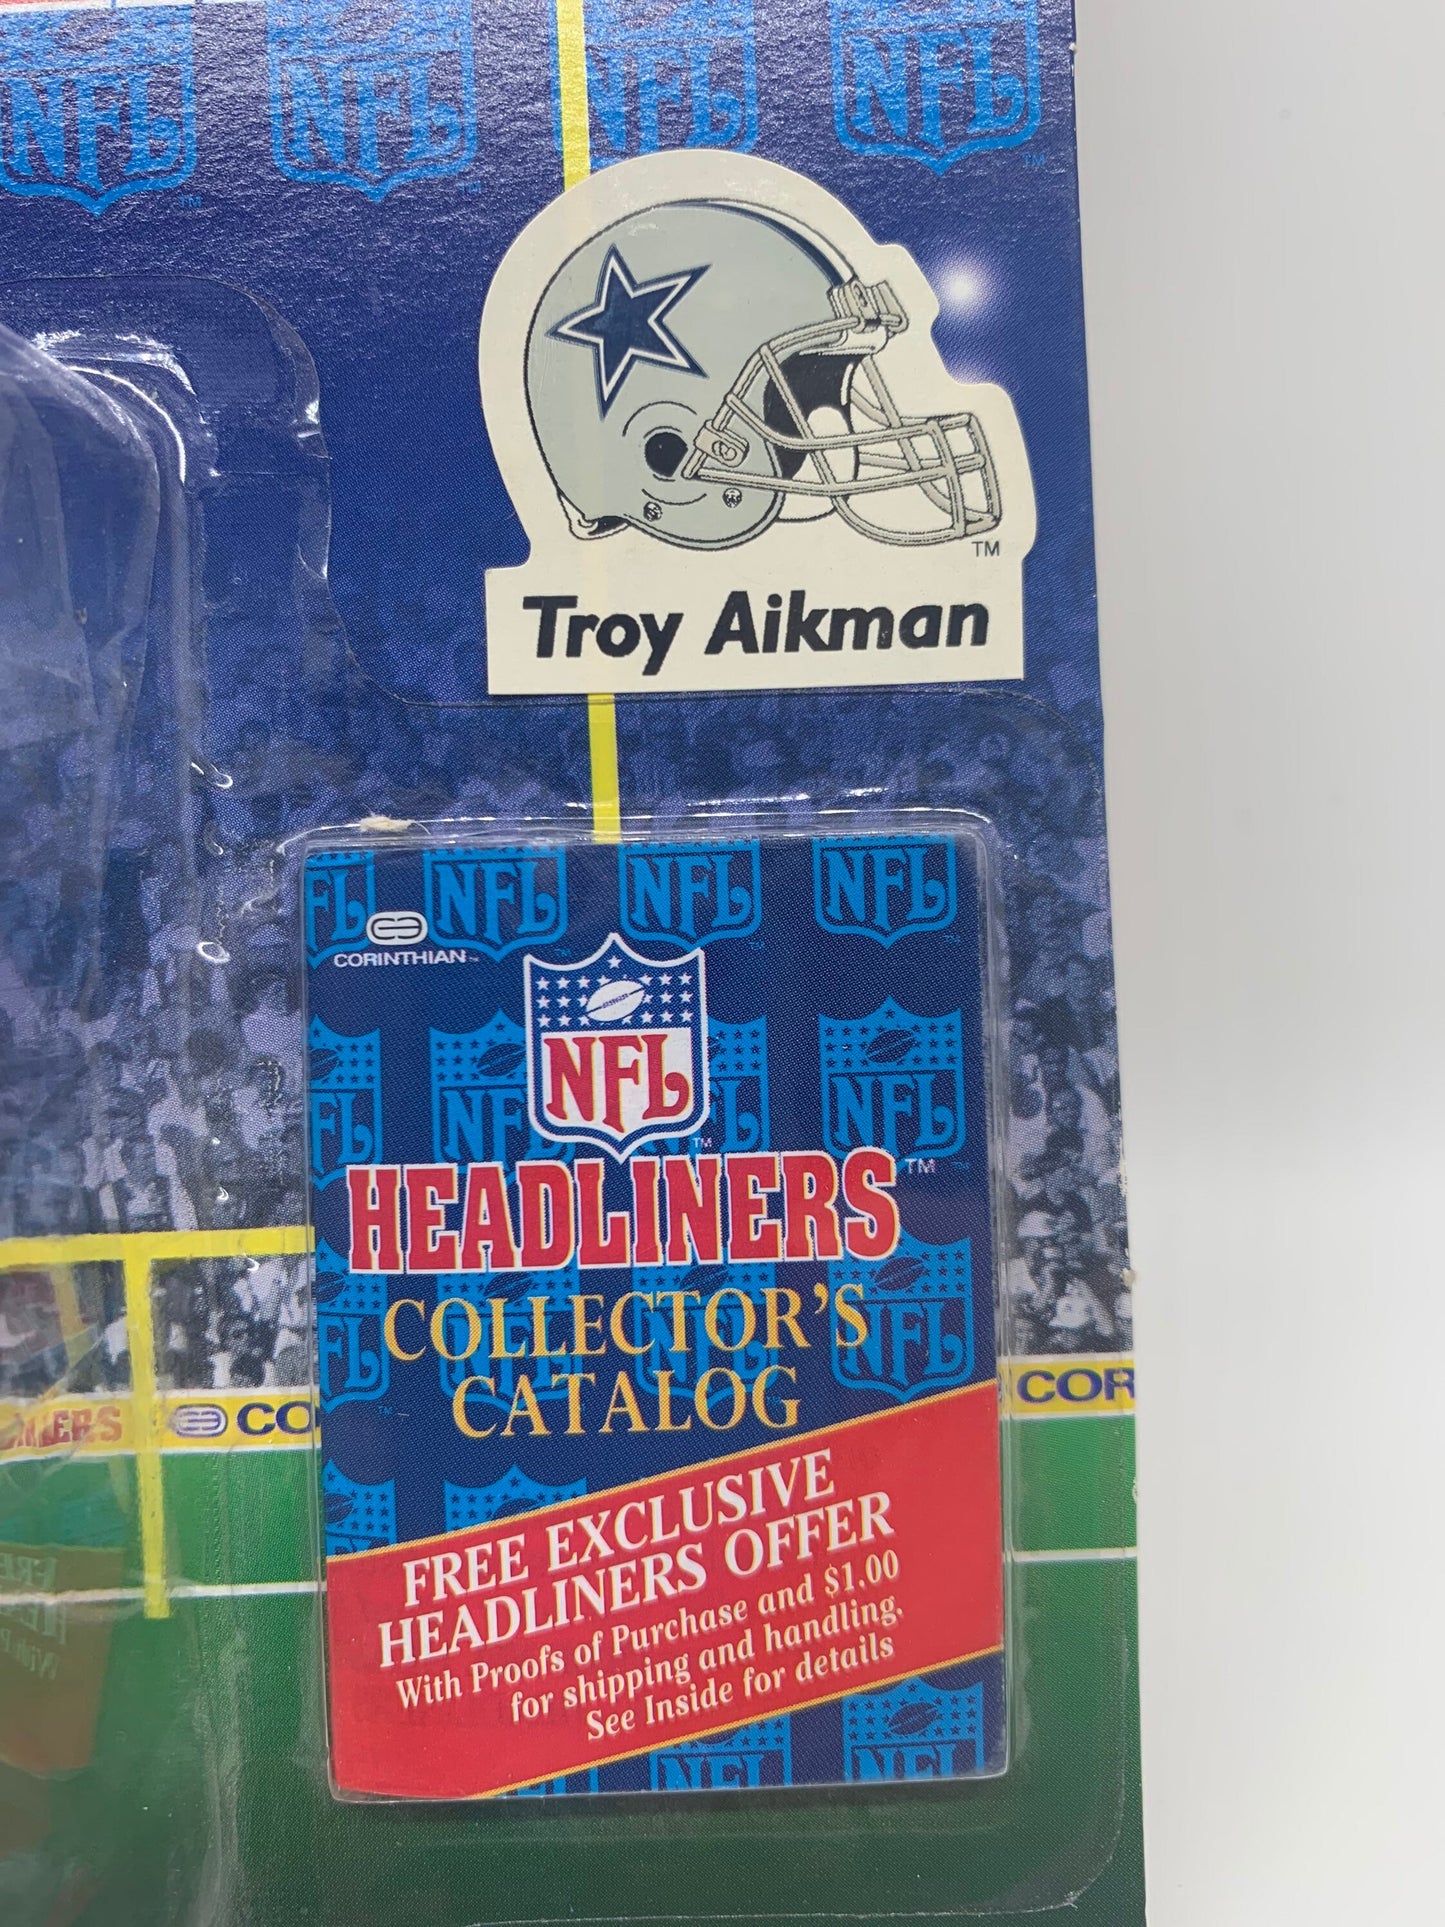 Headliners Troy Aikman Dallas Cowboys Collectable Figure Sports Memorabilia Miniature Figurine Perfect Birthday Gift Football Deco